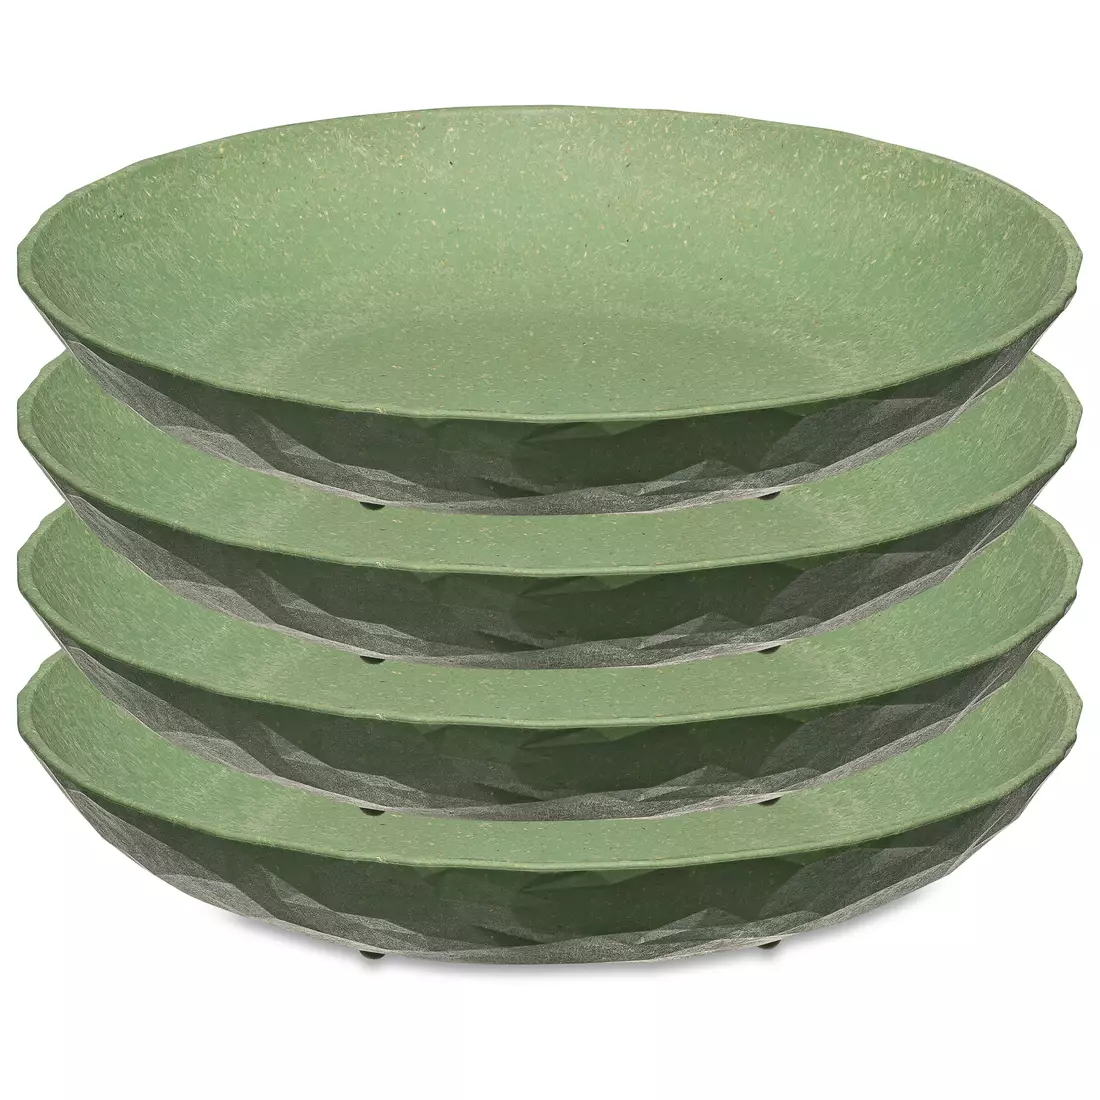 KOZIOL CLUB set of 4 plates, nature leaf green